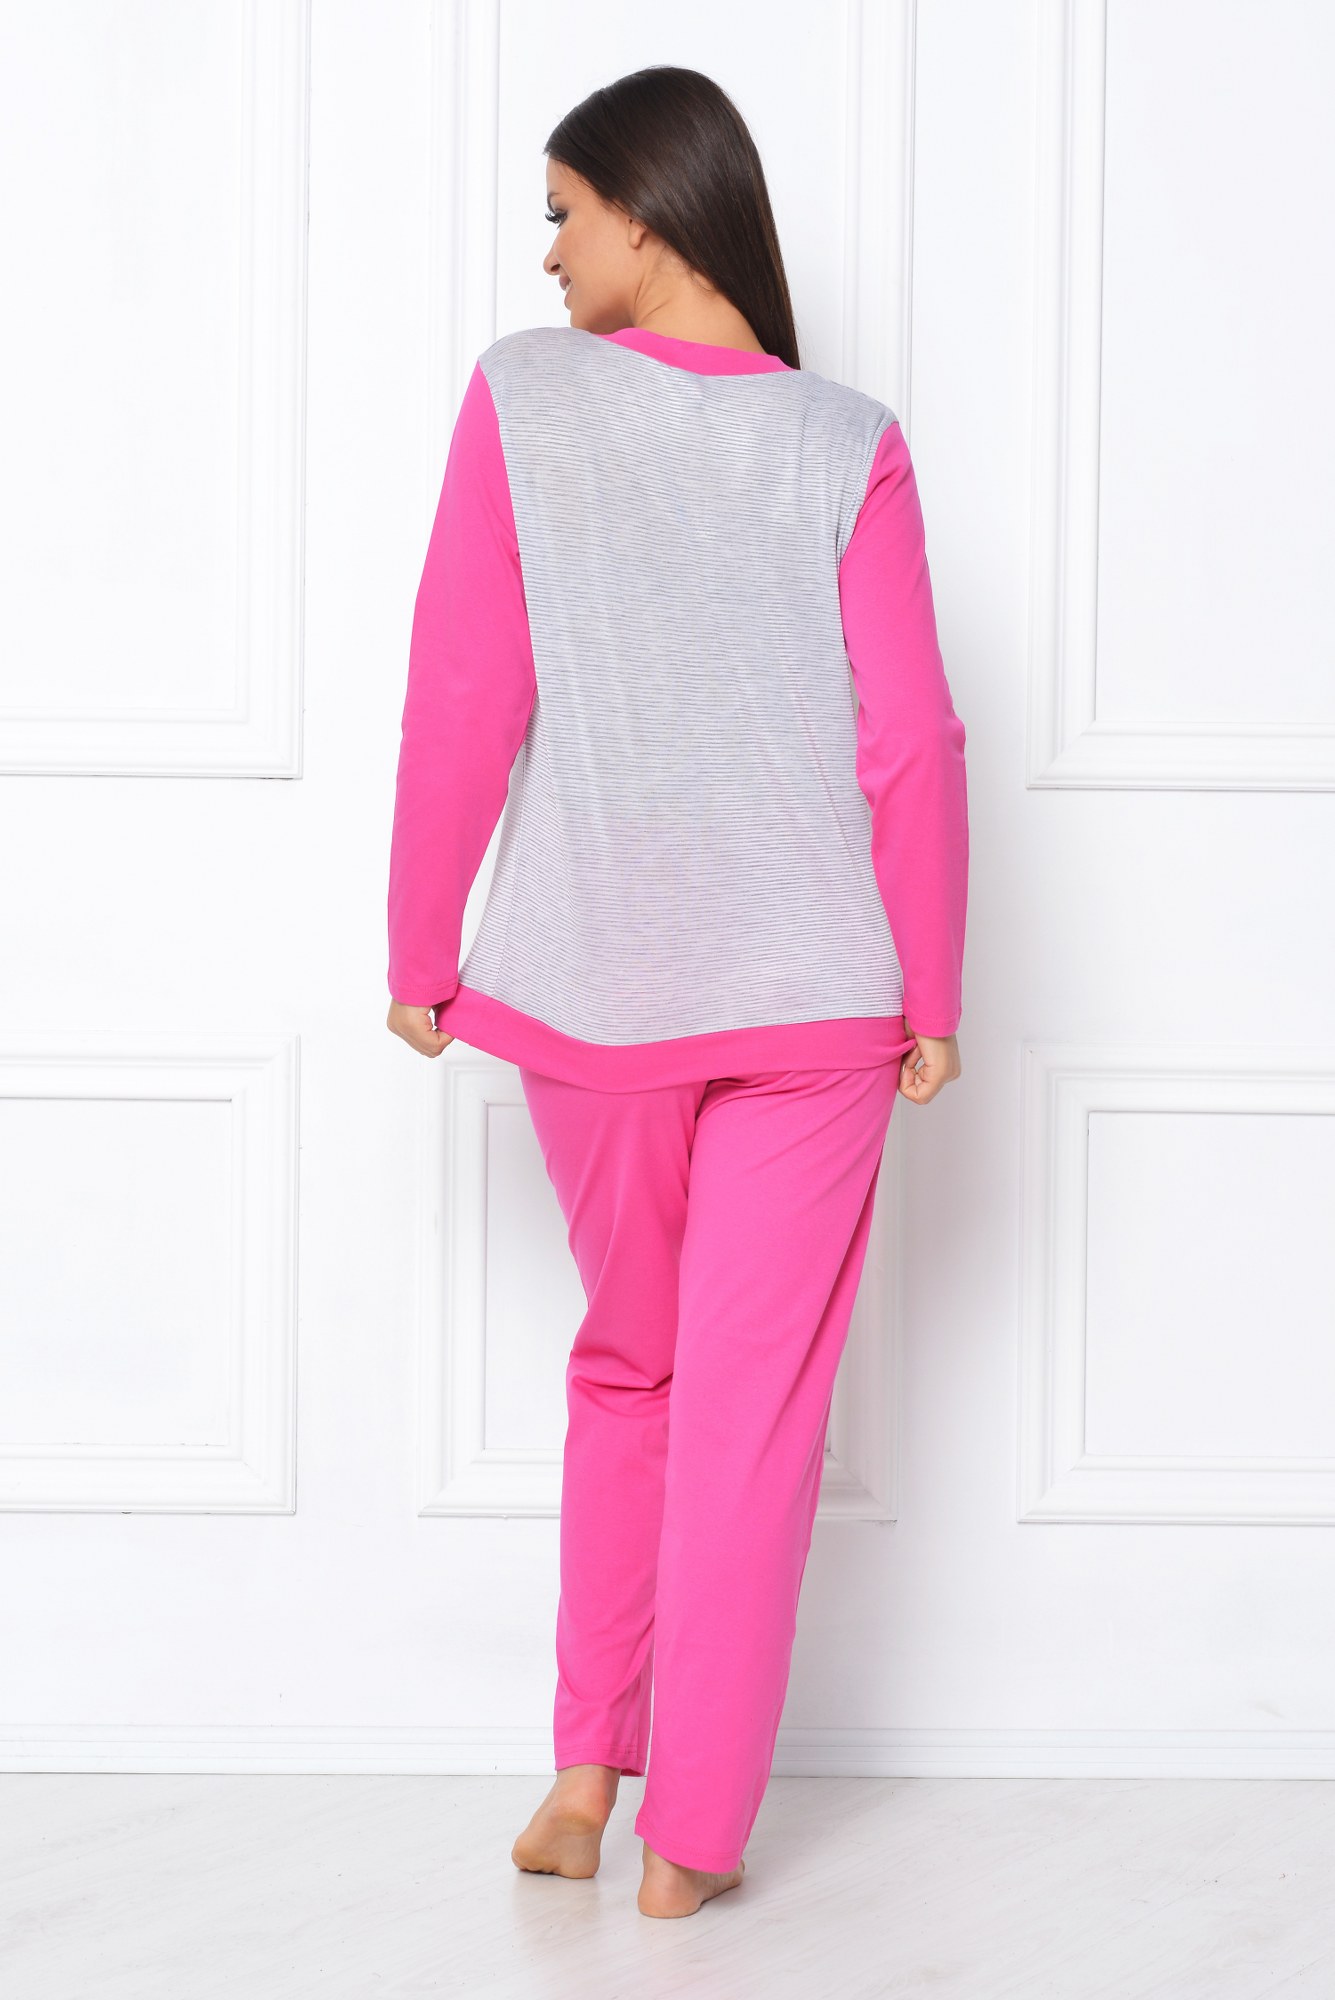 Pijama roz-alb cu dungi